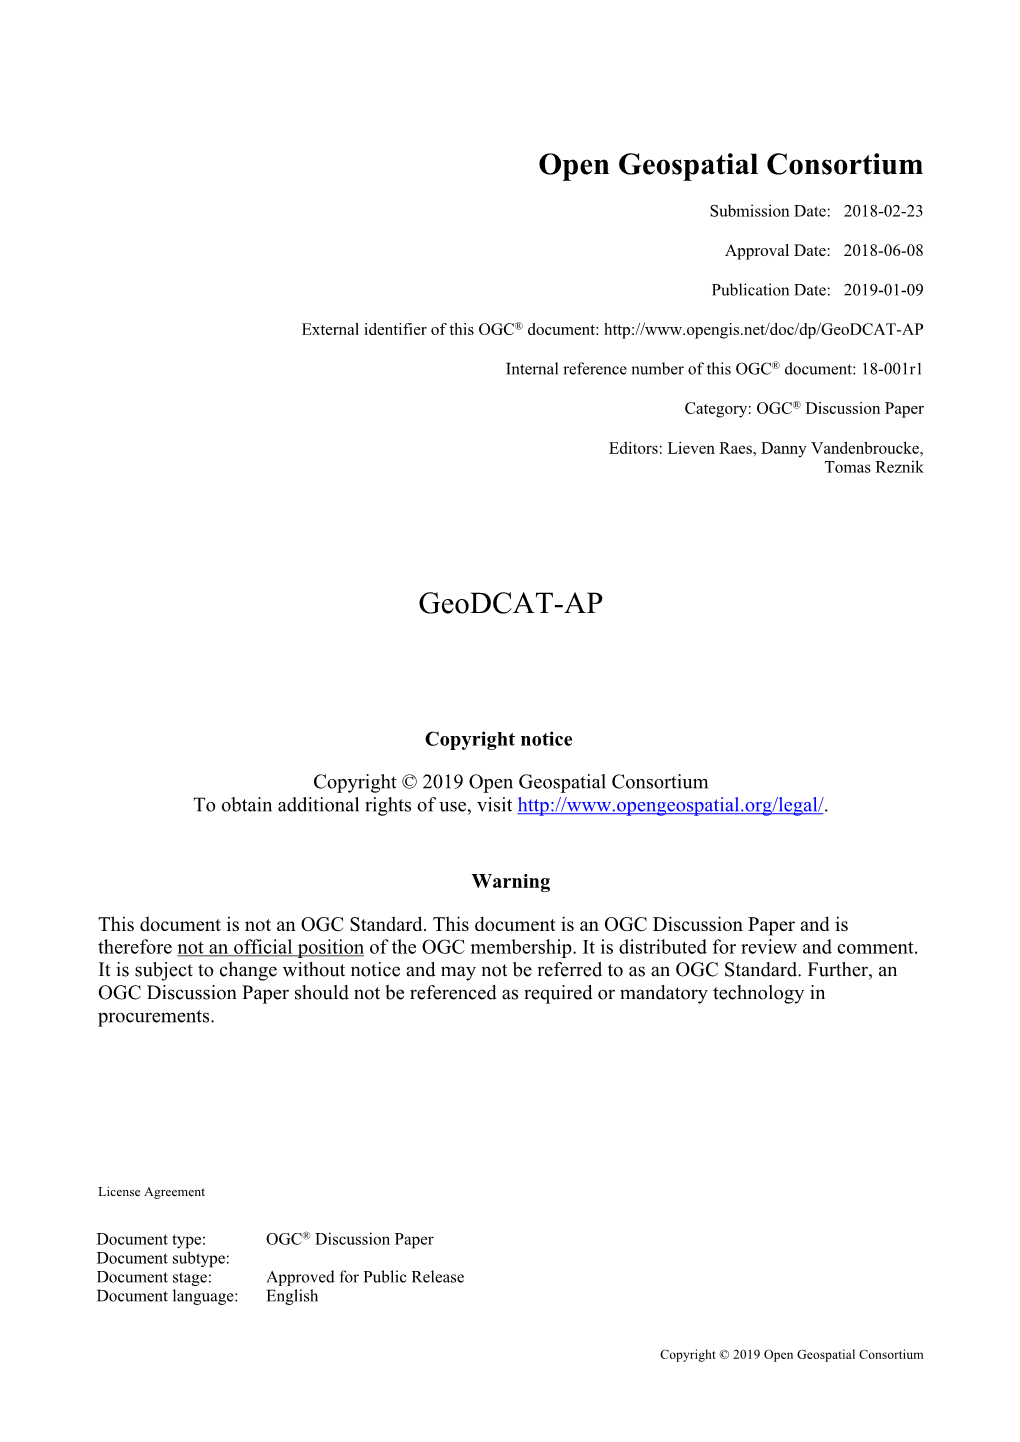 Open Geospatial Consortium Geodcat-AP